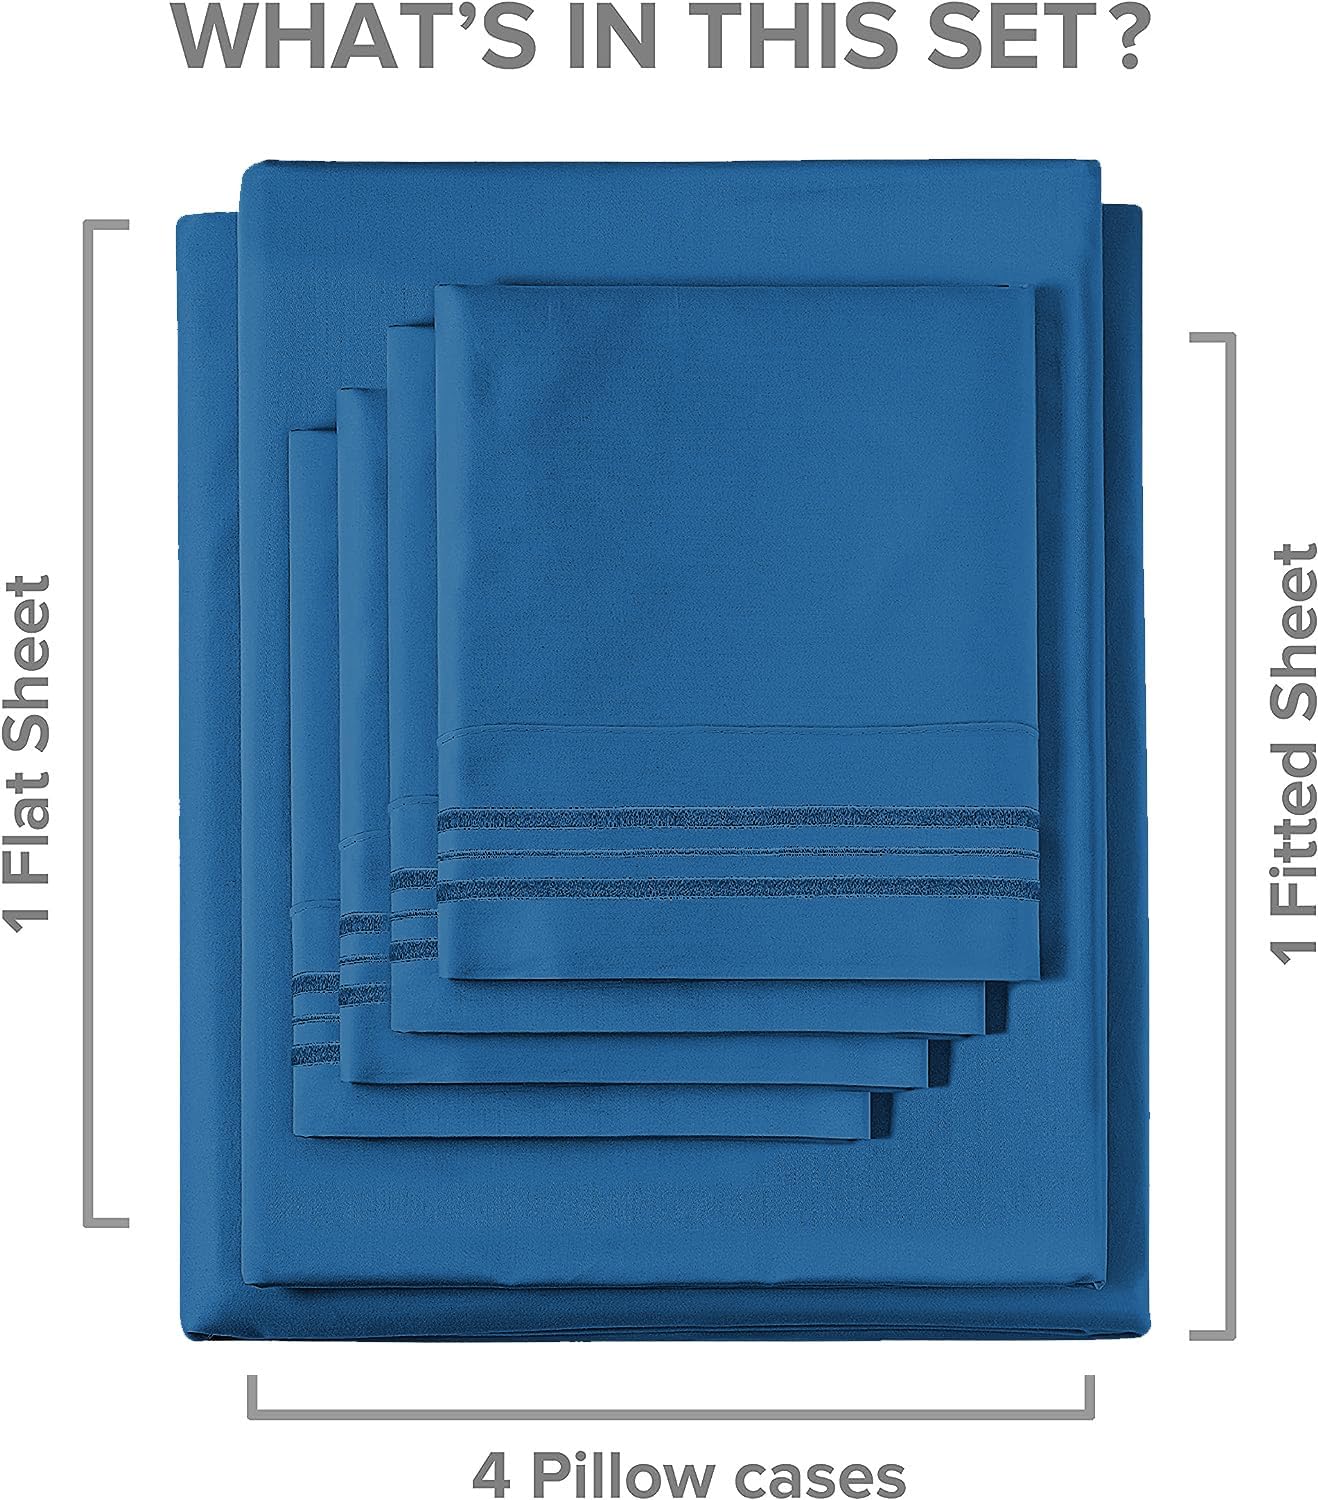 tes 6 Piece Deep Pocket Sheet Set New Colors - Royal Blue